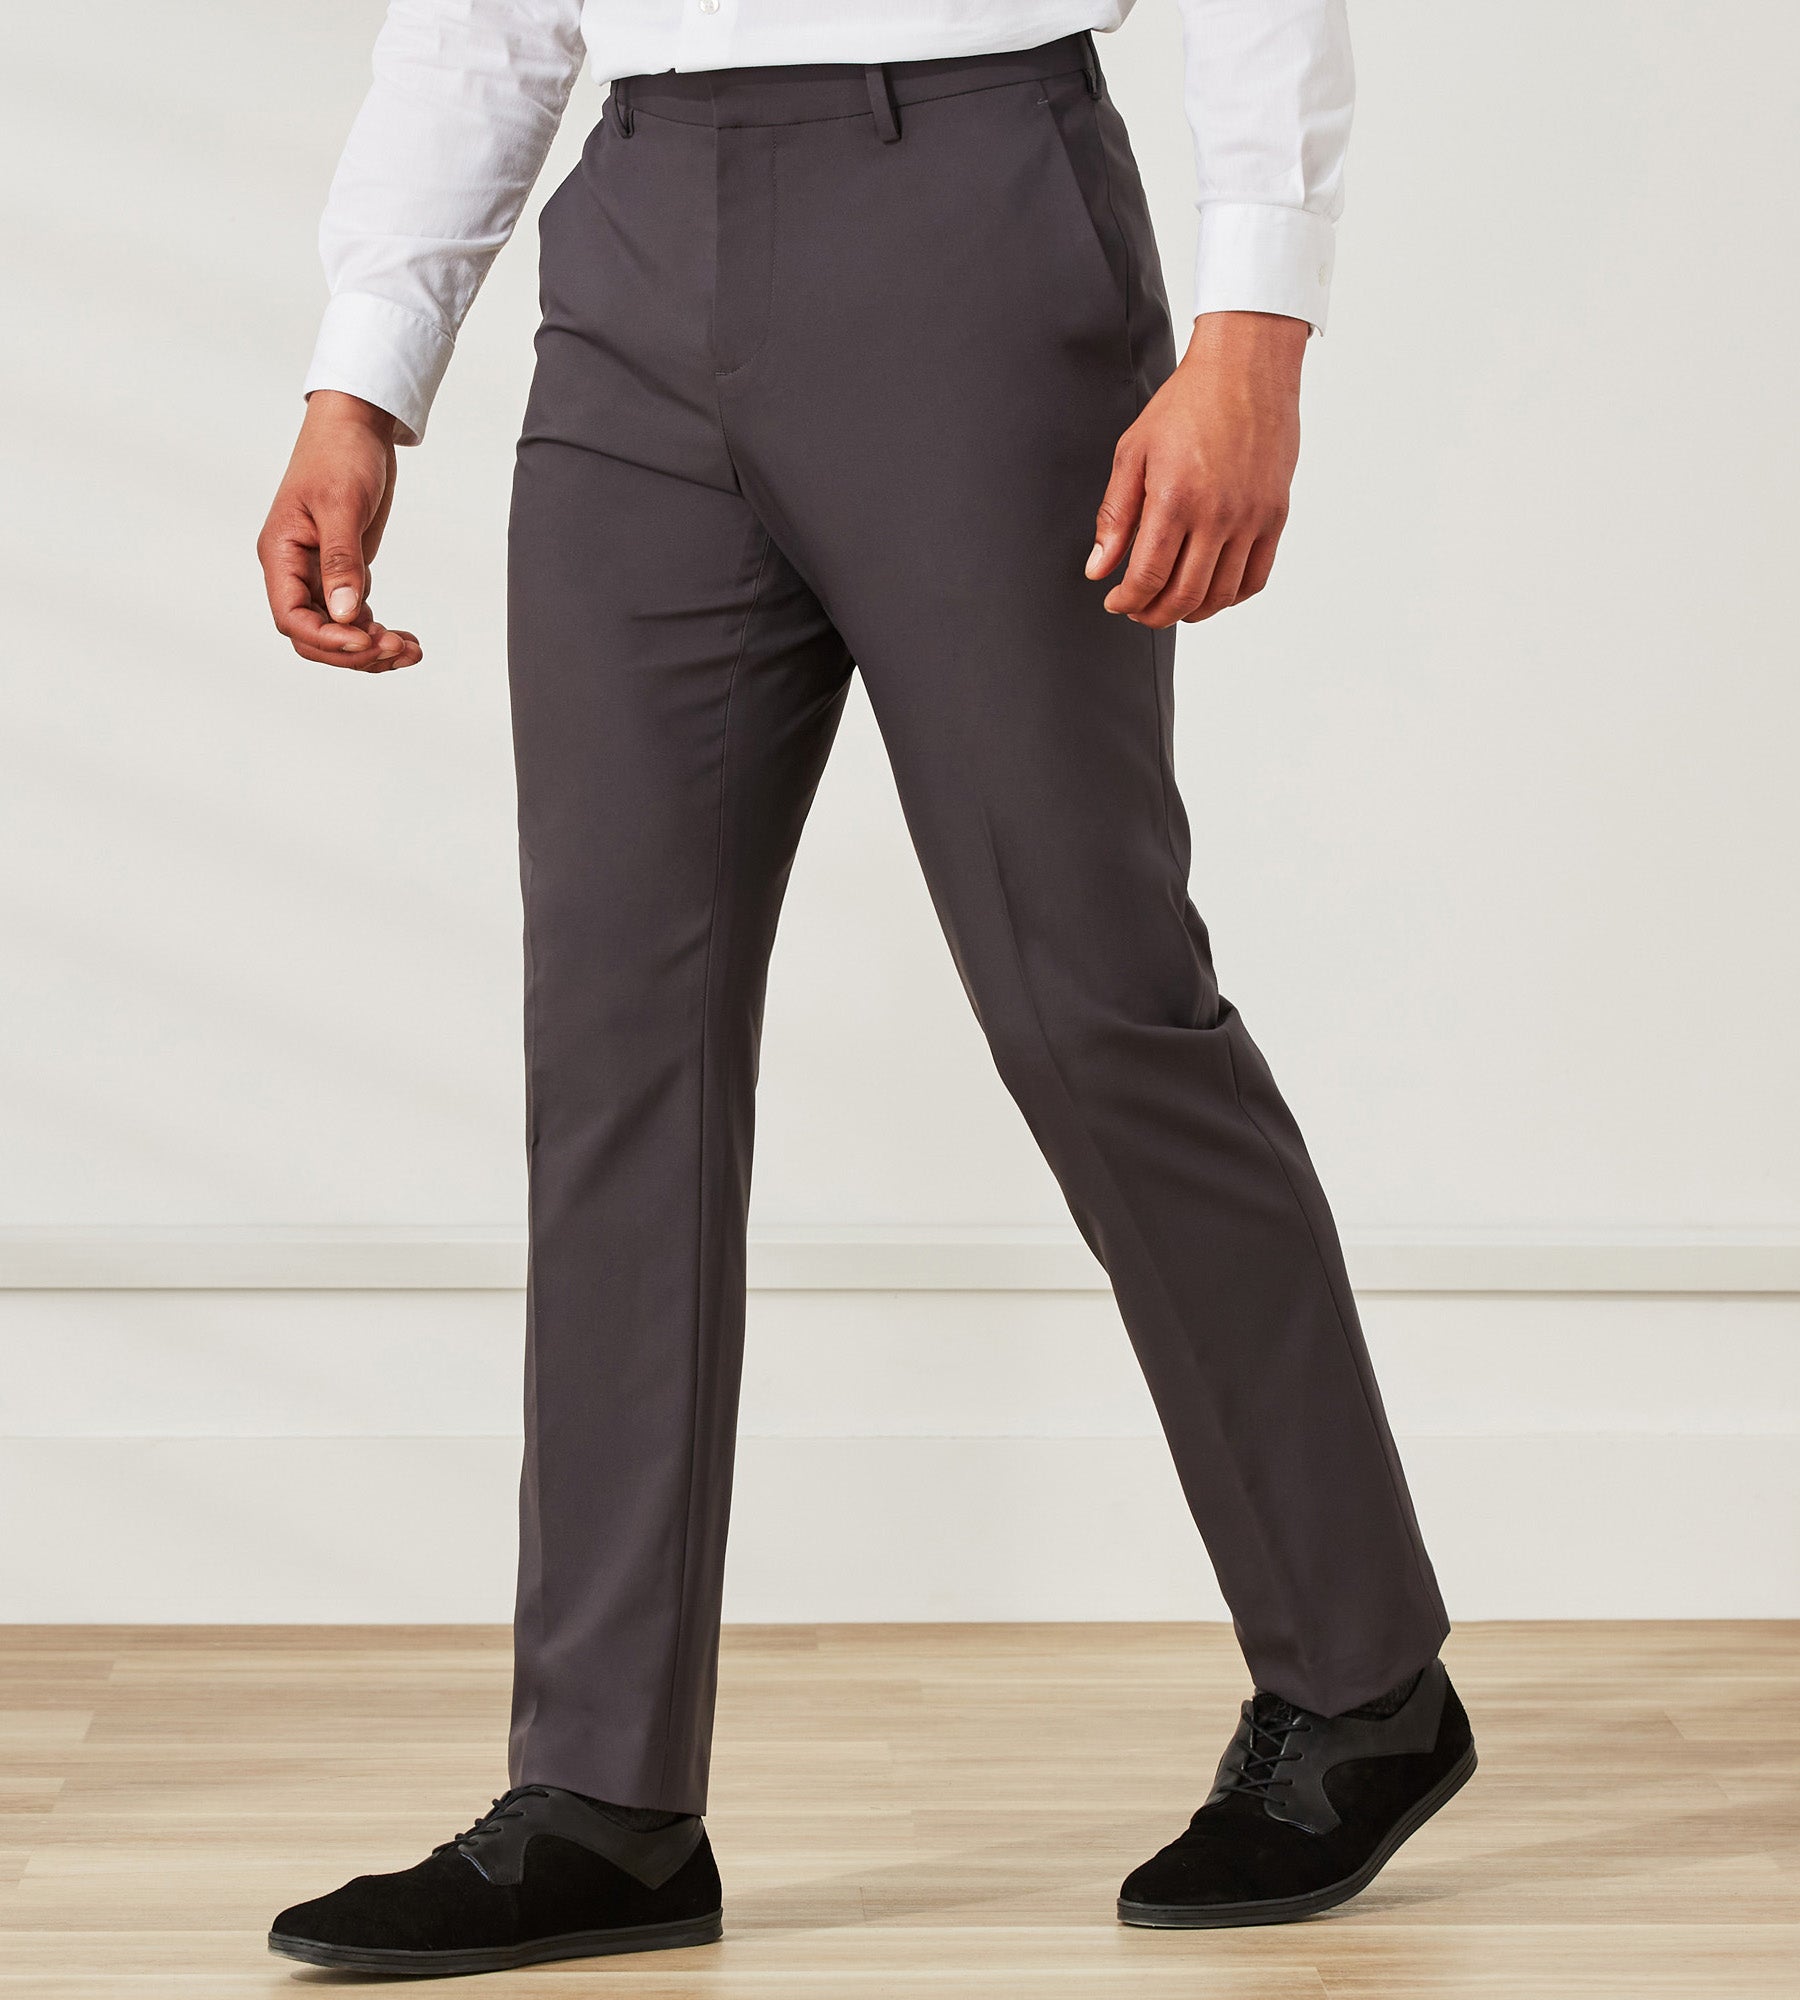 Attractive Slim Fit Dress Pant Design, Best Slim Fit Dress Pant, Dress Pant  For Men